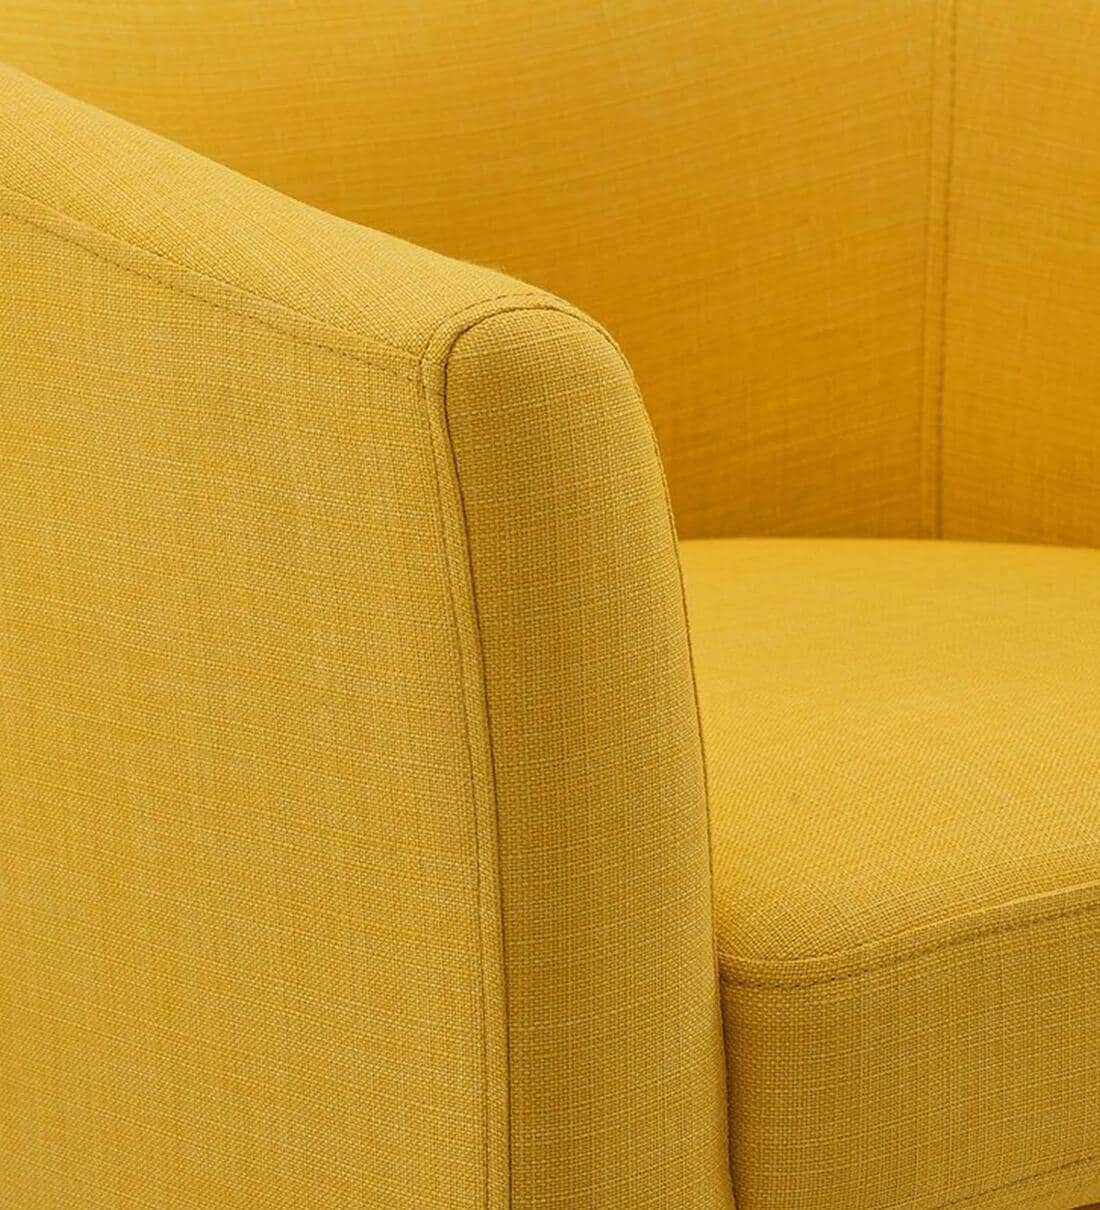 Lovida Fabric Barrel Chair in Bold Yellow Colour